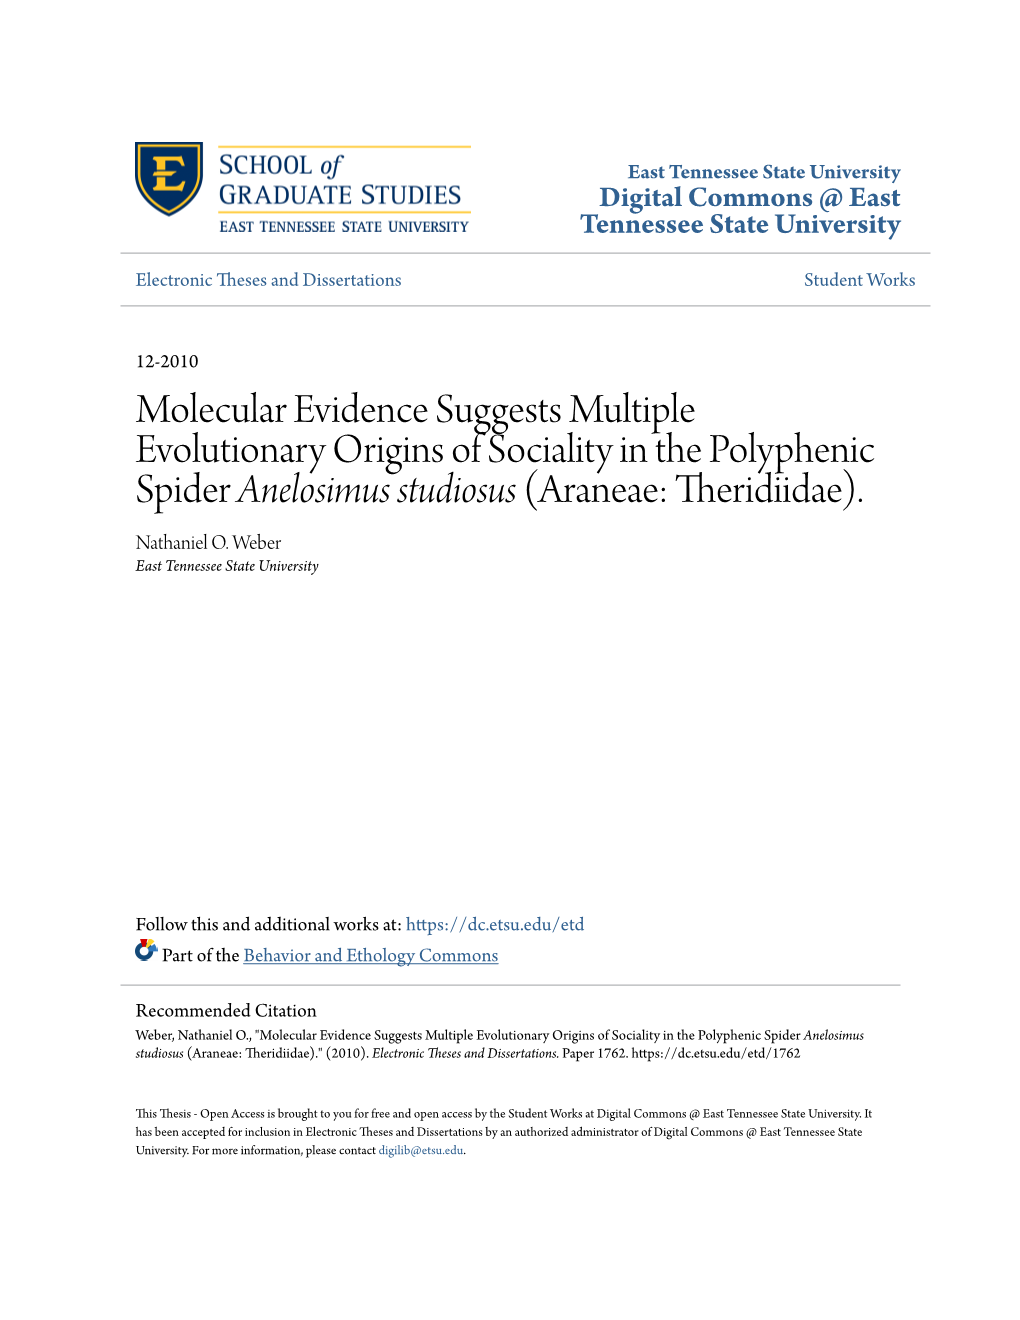 Molecular Evidence Suggests Multiple Evolutionary Origins of Sociality in the Polyphenic Spider Anelosimus Studiosus (Araneae: Theridiidae)